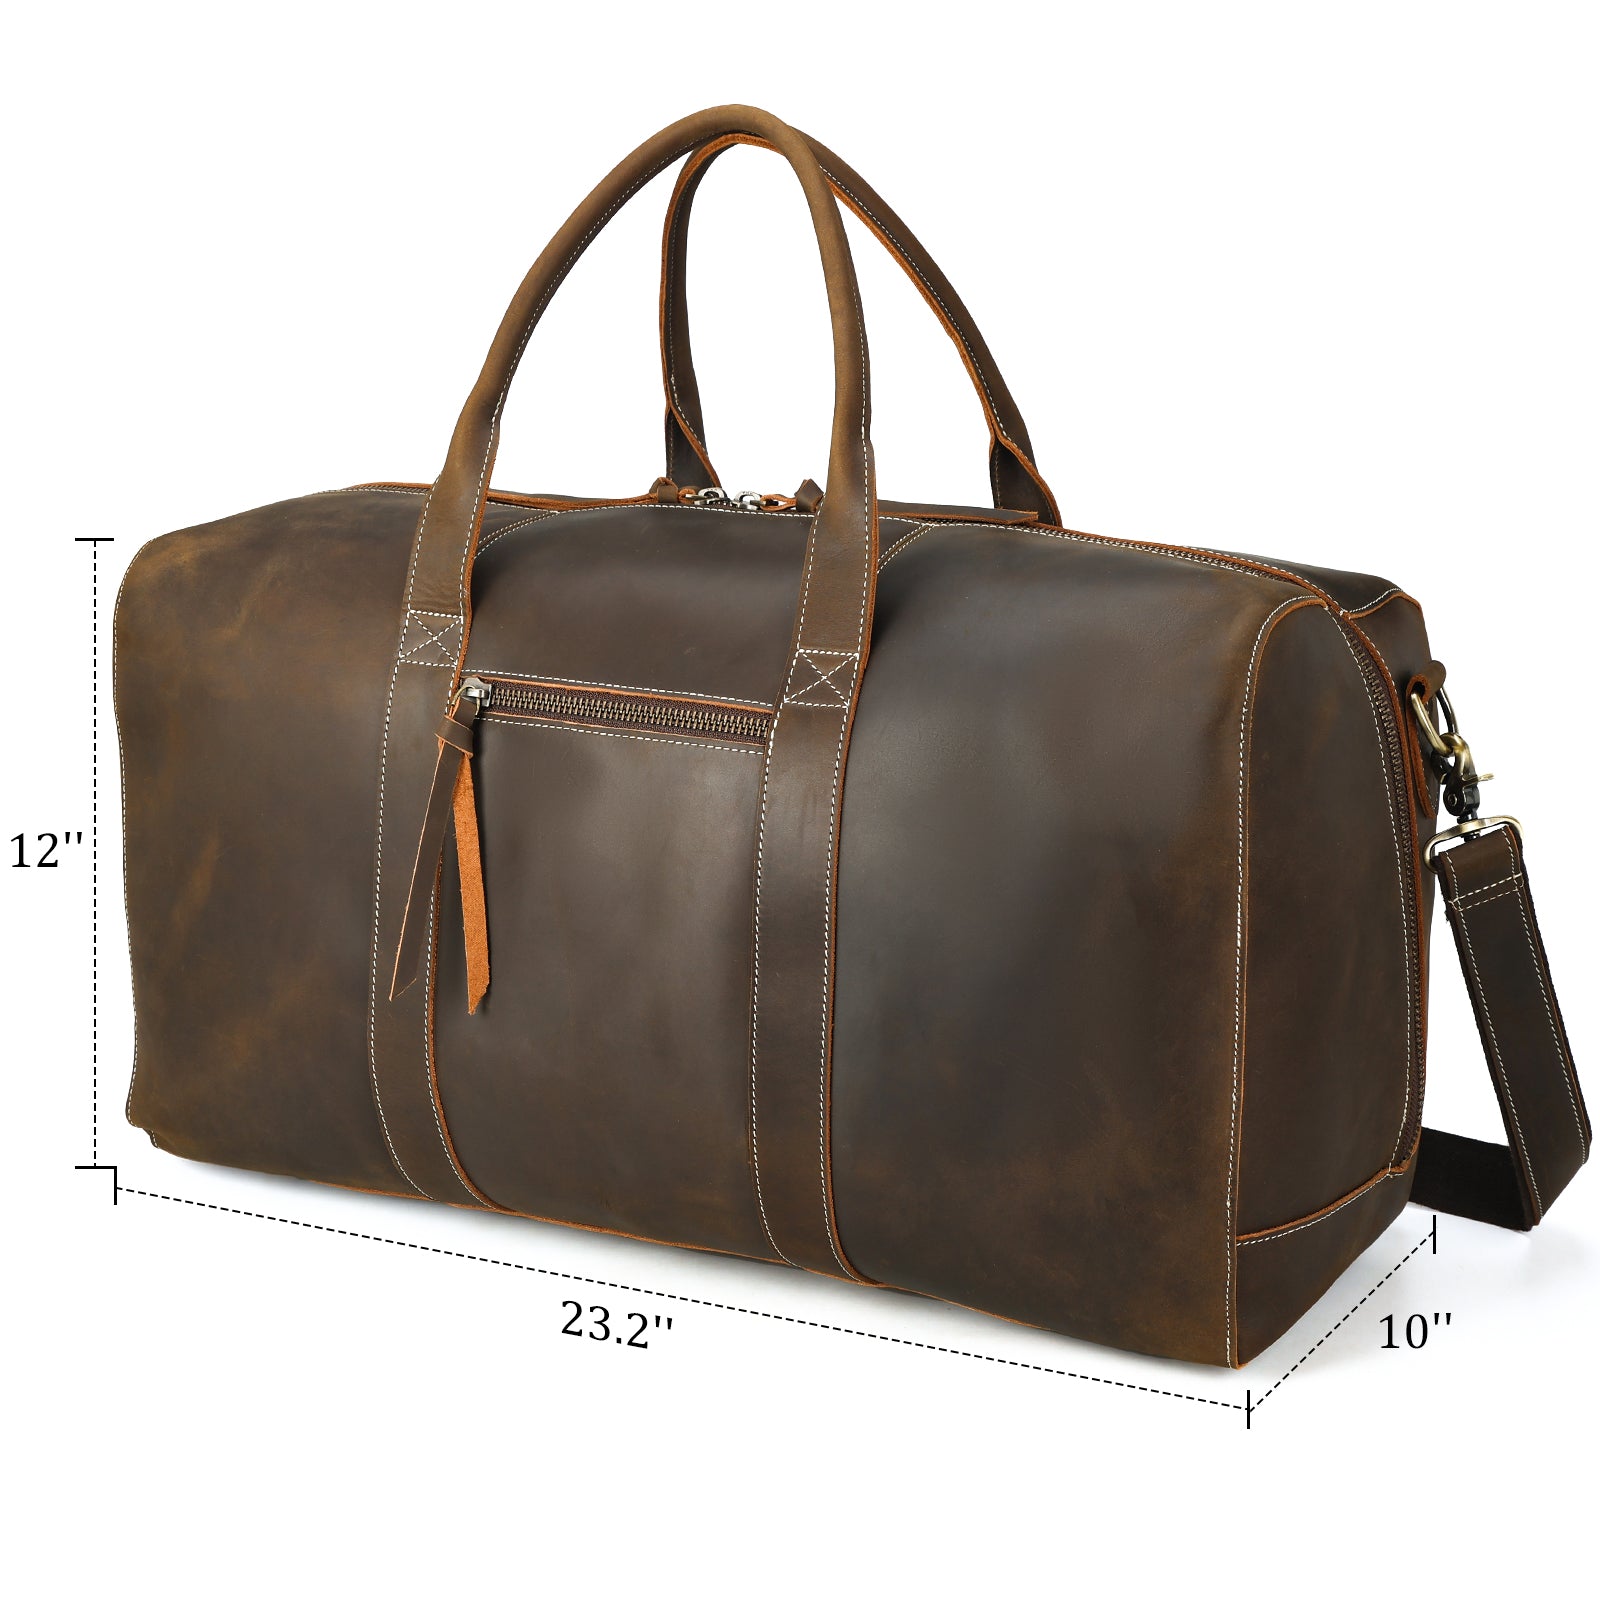 Polare 23.2'' Leather Duffel Bag Overnight Weekender Bag (Brown, Dimension)